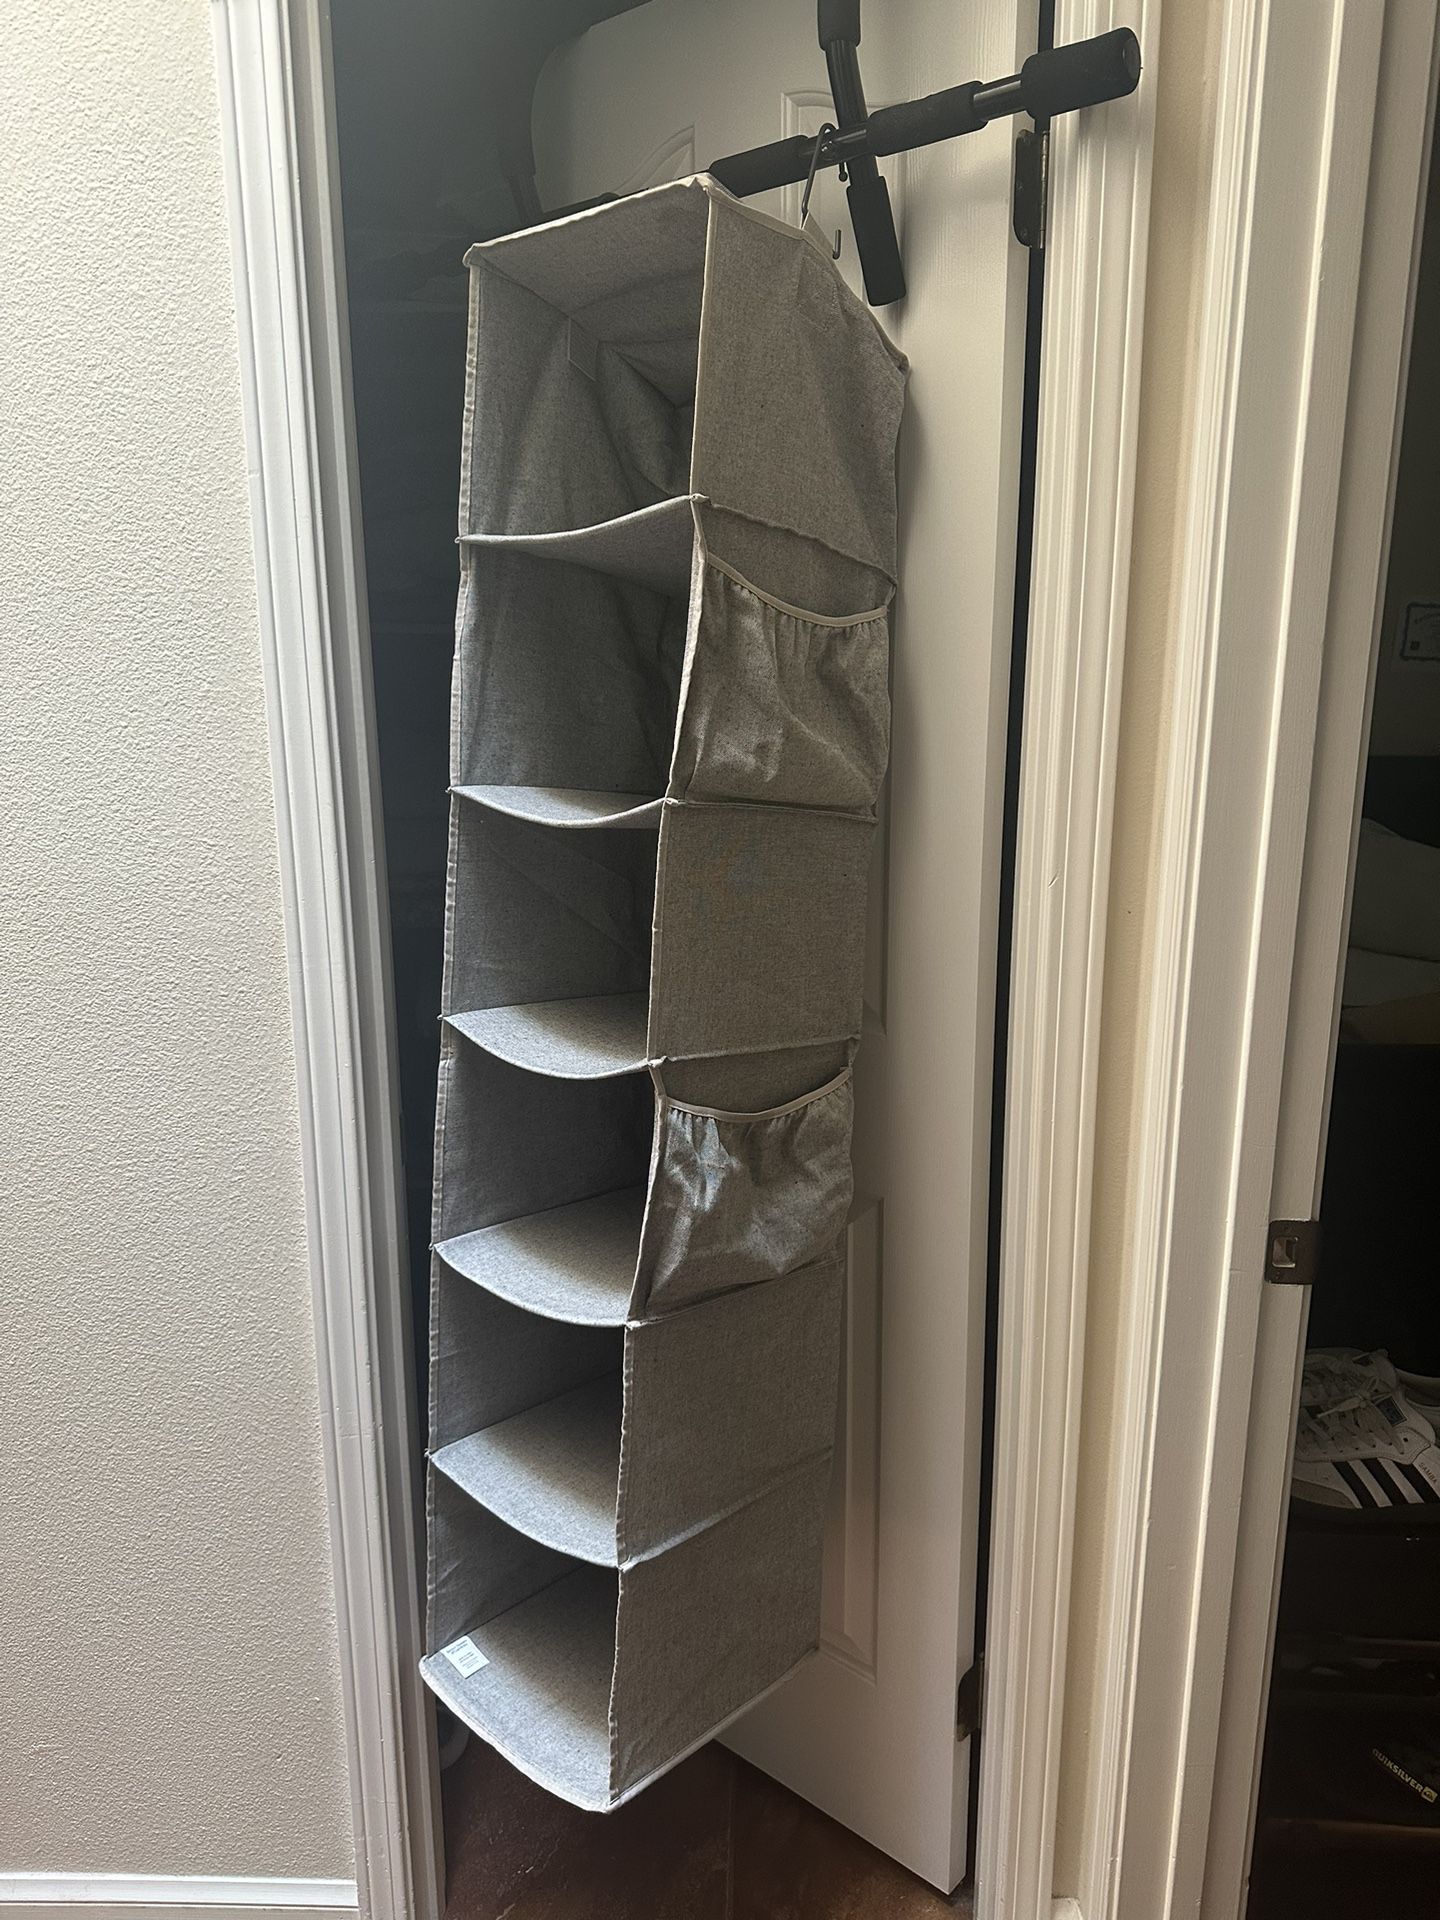 Hanging Shoe Shelves - 6 Sections - Closet Organizer - Grey